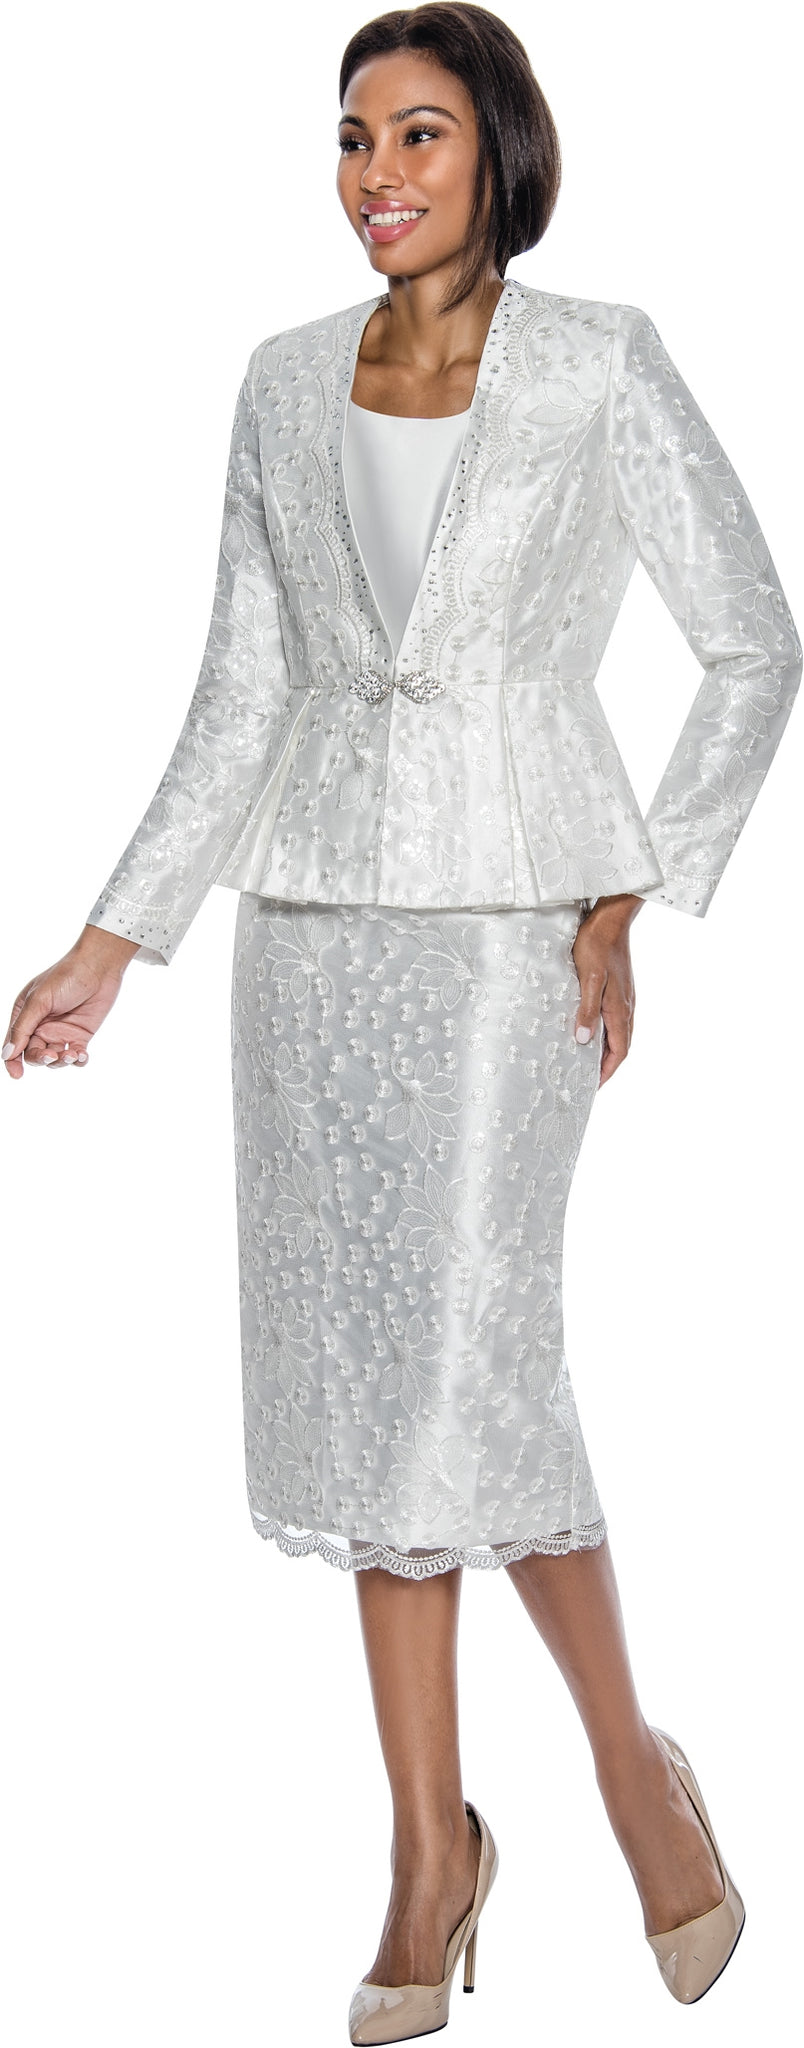 Terramina Church Suit 7069-White - Church Suits For Less